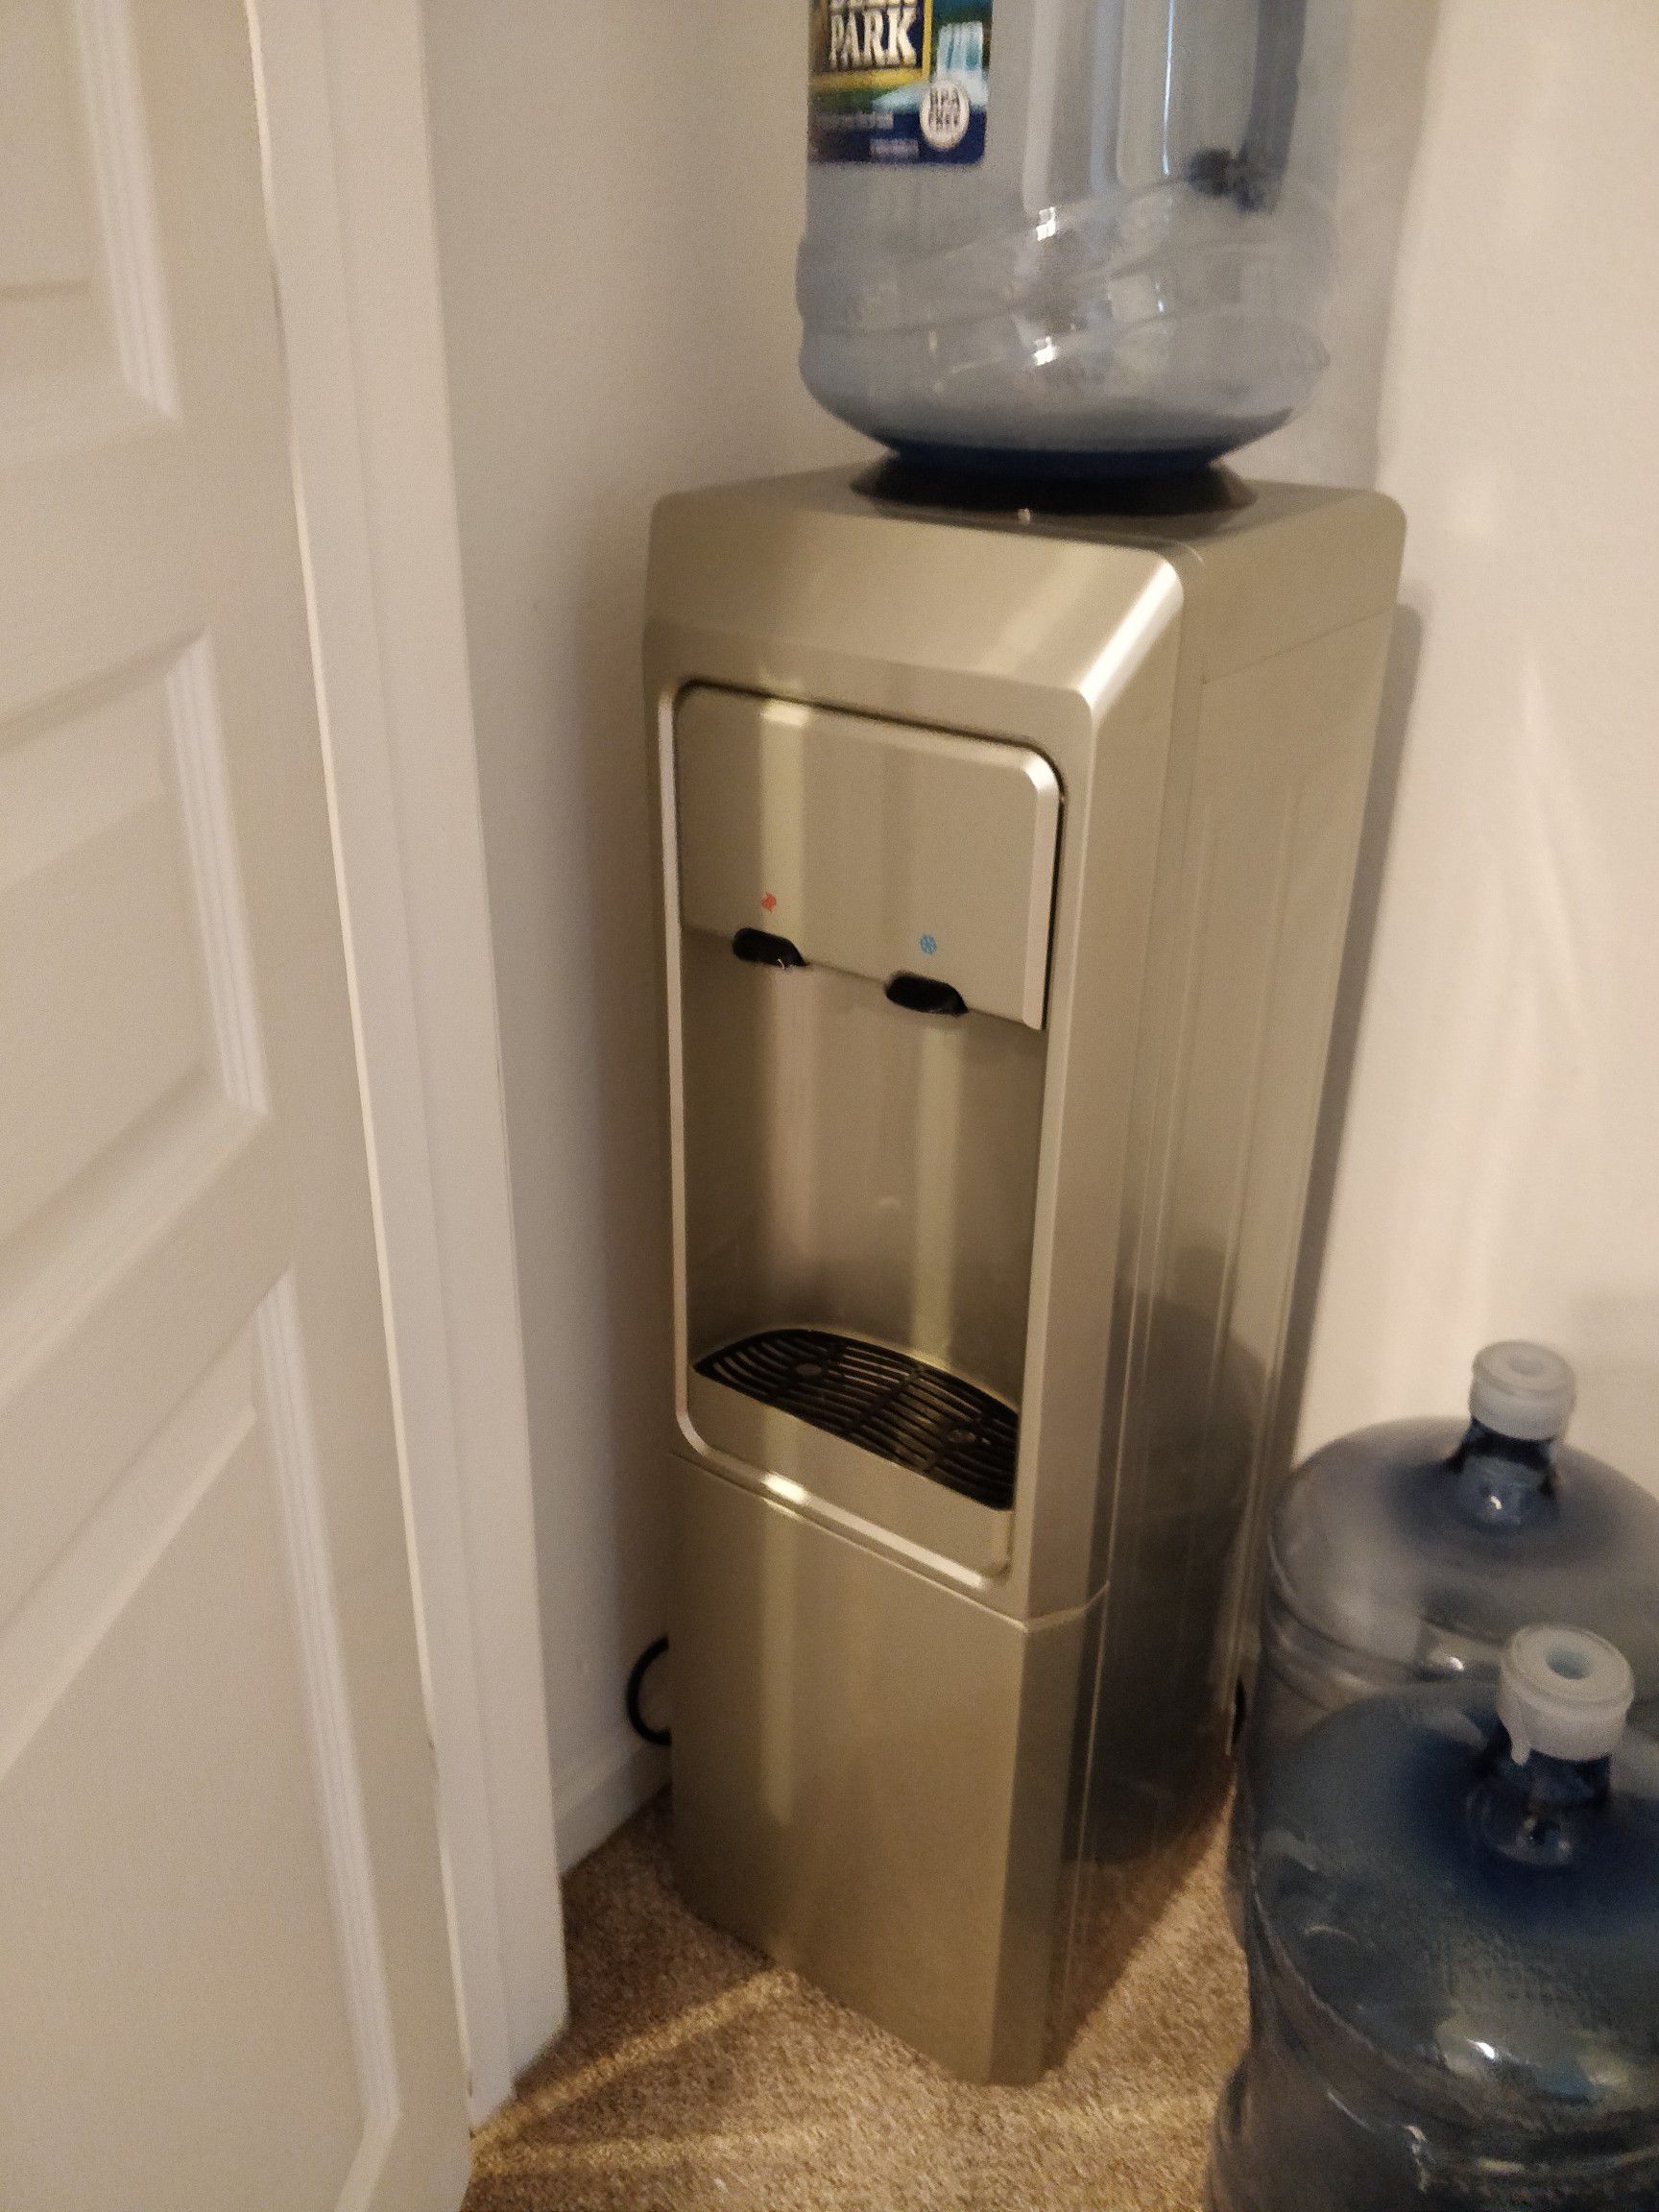 Water cooler/ heater